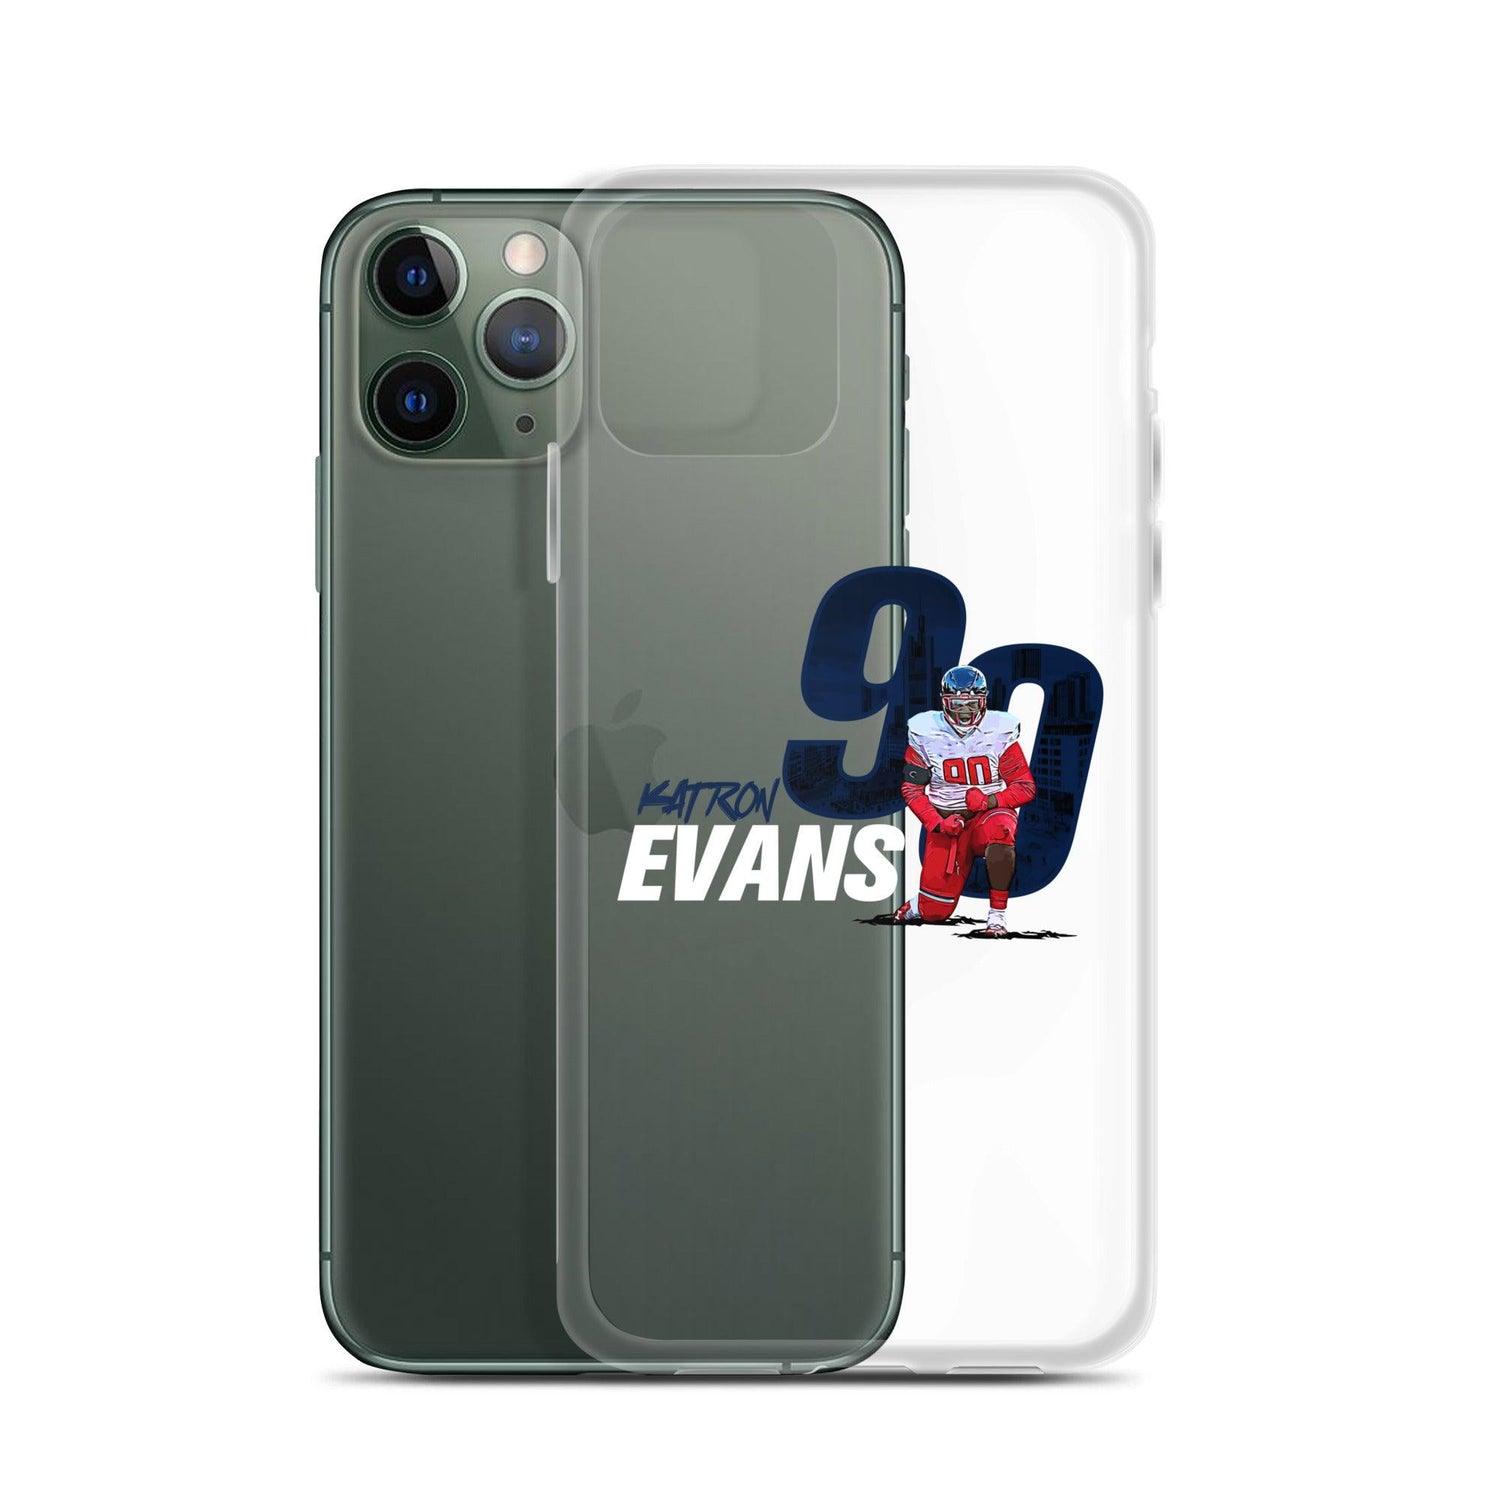 Katron Evans "Gameday" iPhone Case - Fan Arch